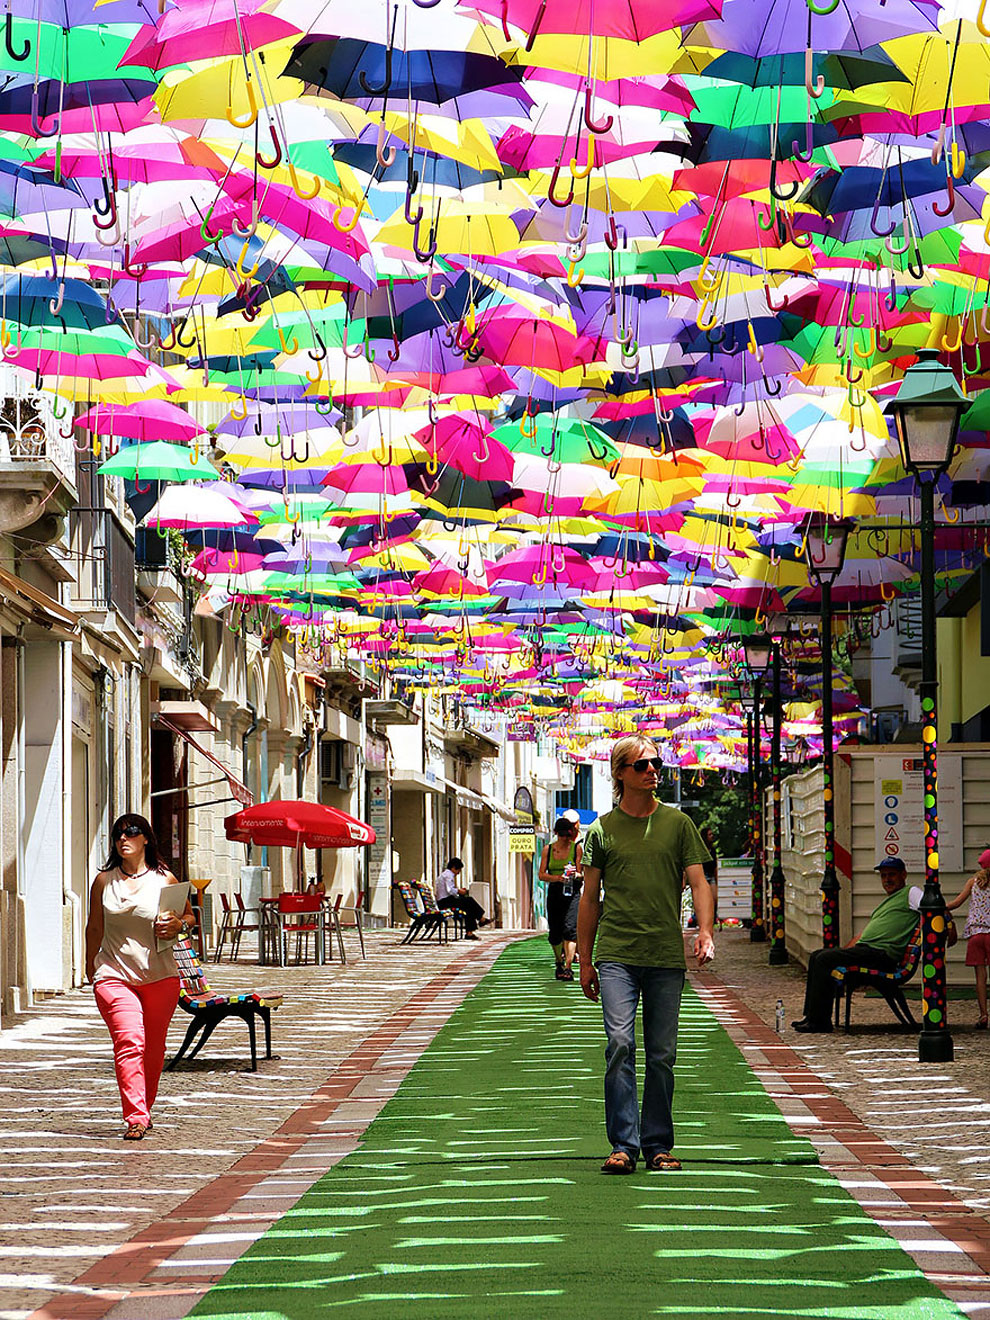 455 Umbrella Sky in Agueda, Portugal